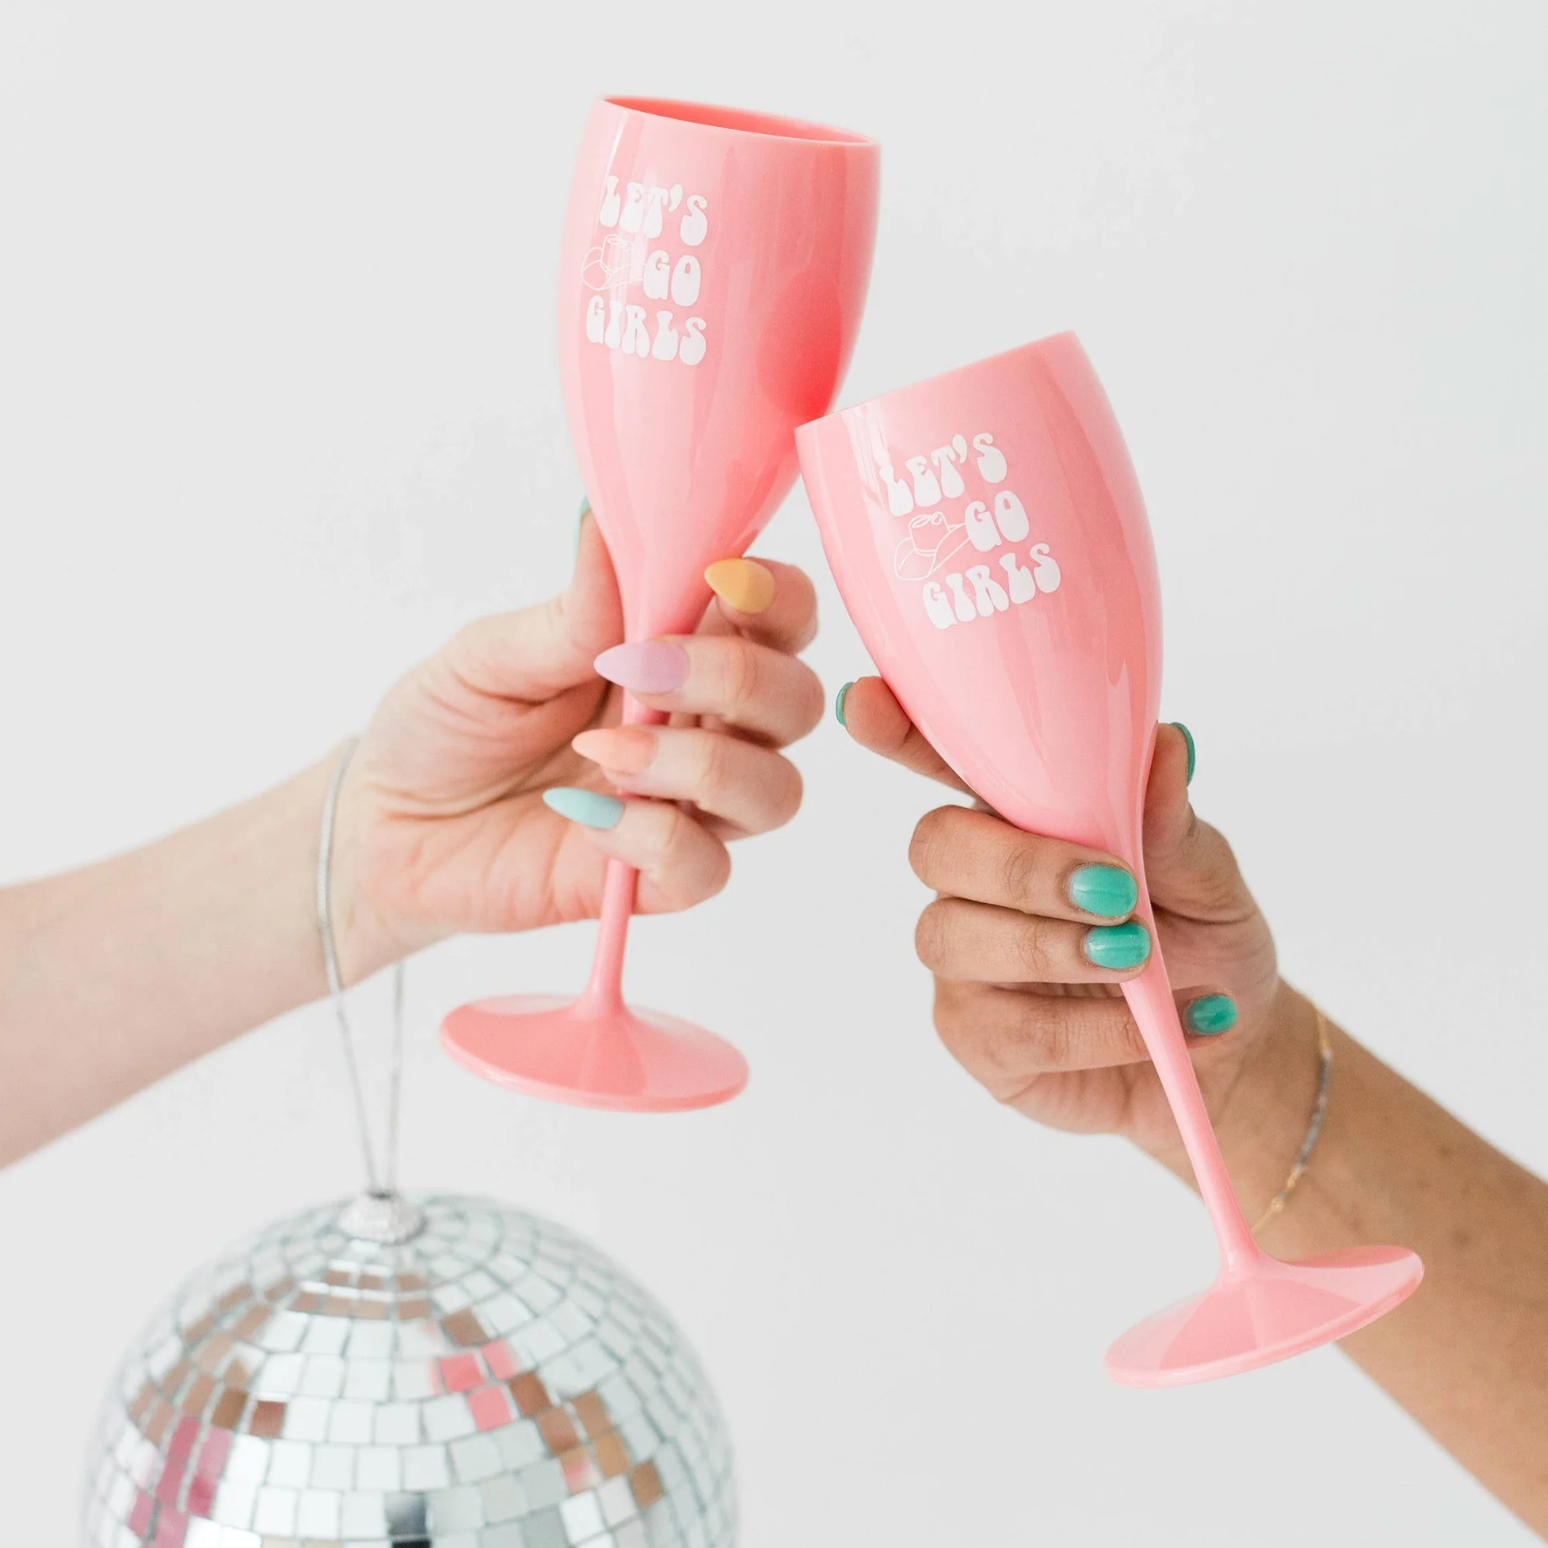 Let’s Go Girls Pink Champagne Flute